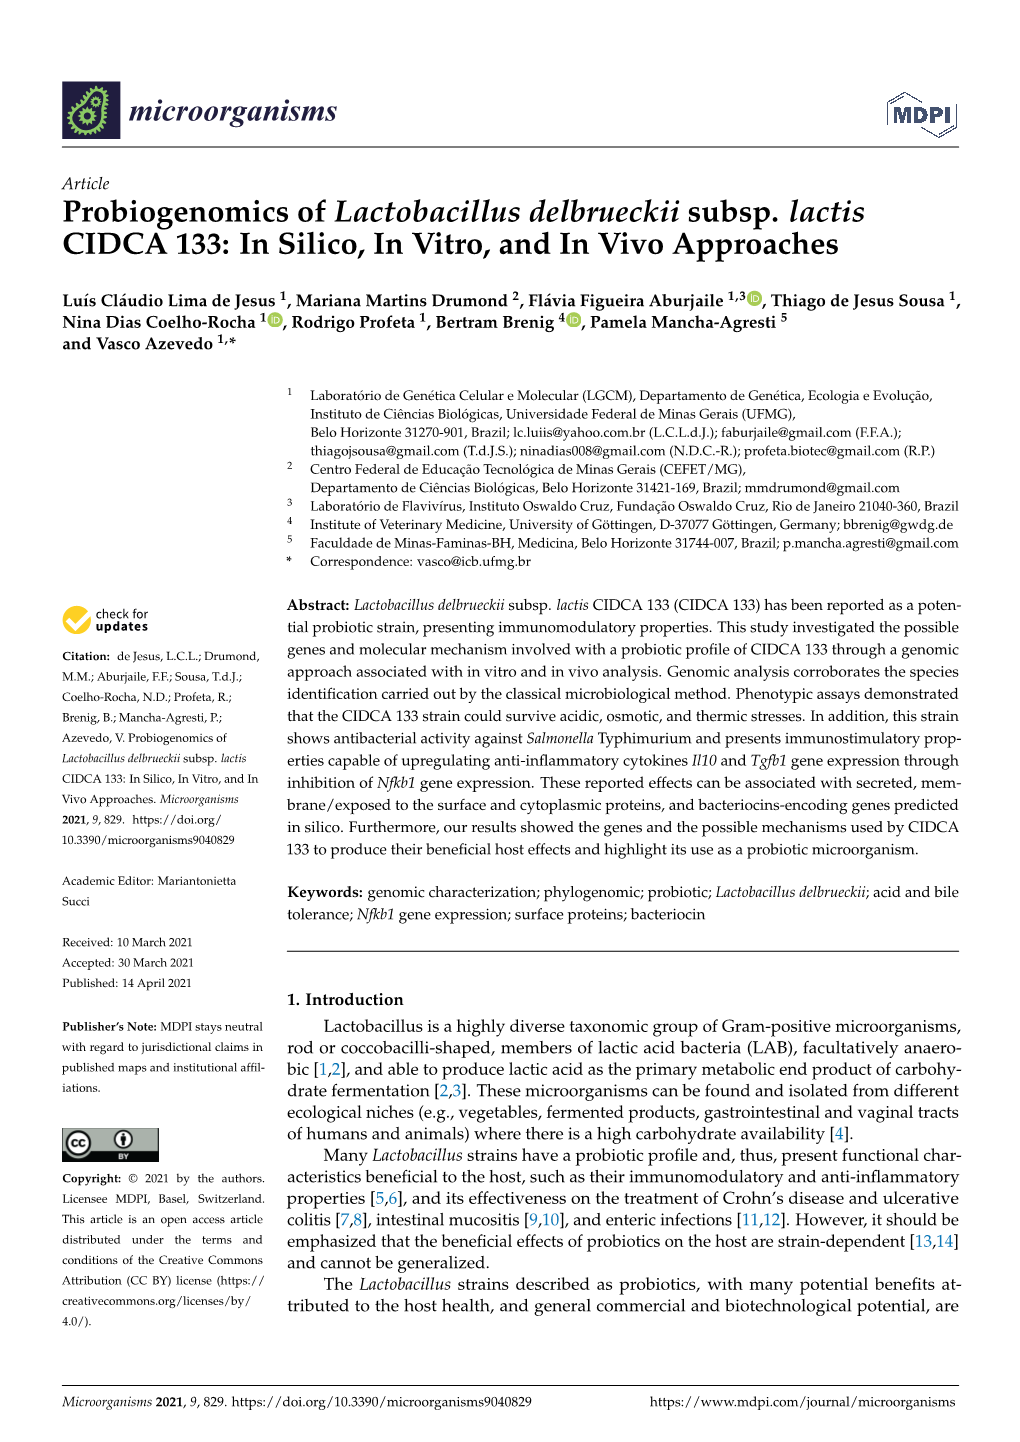 Probiogenomics of Lactobacillus Delbrueckii Subsp. Lactis CIDCA 133: in Silico, in Vitro, and in Vivo Approaches